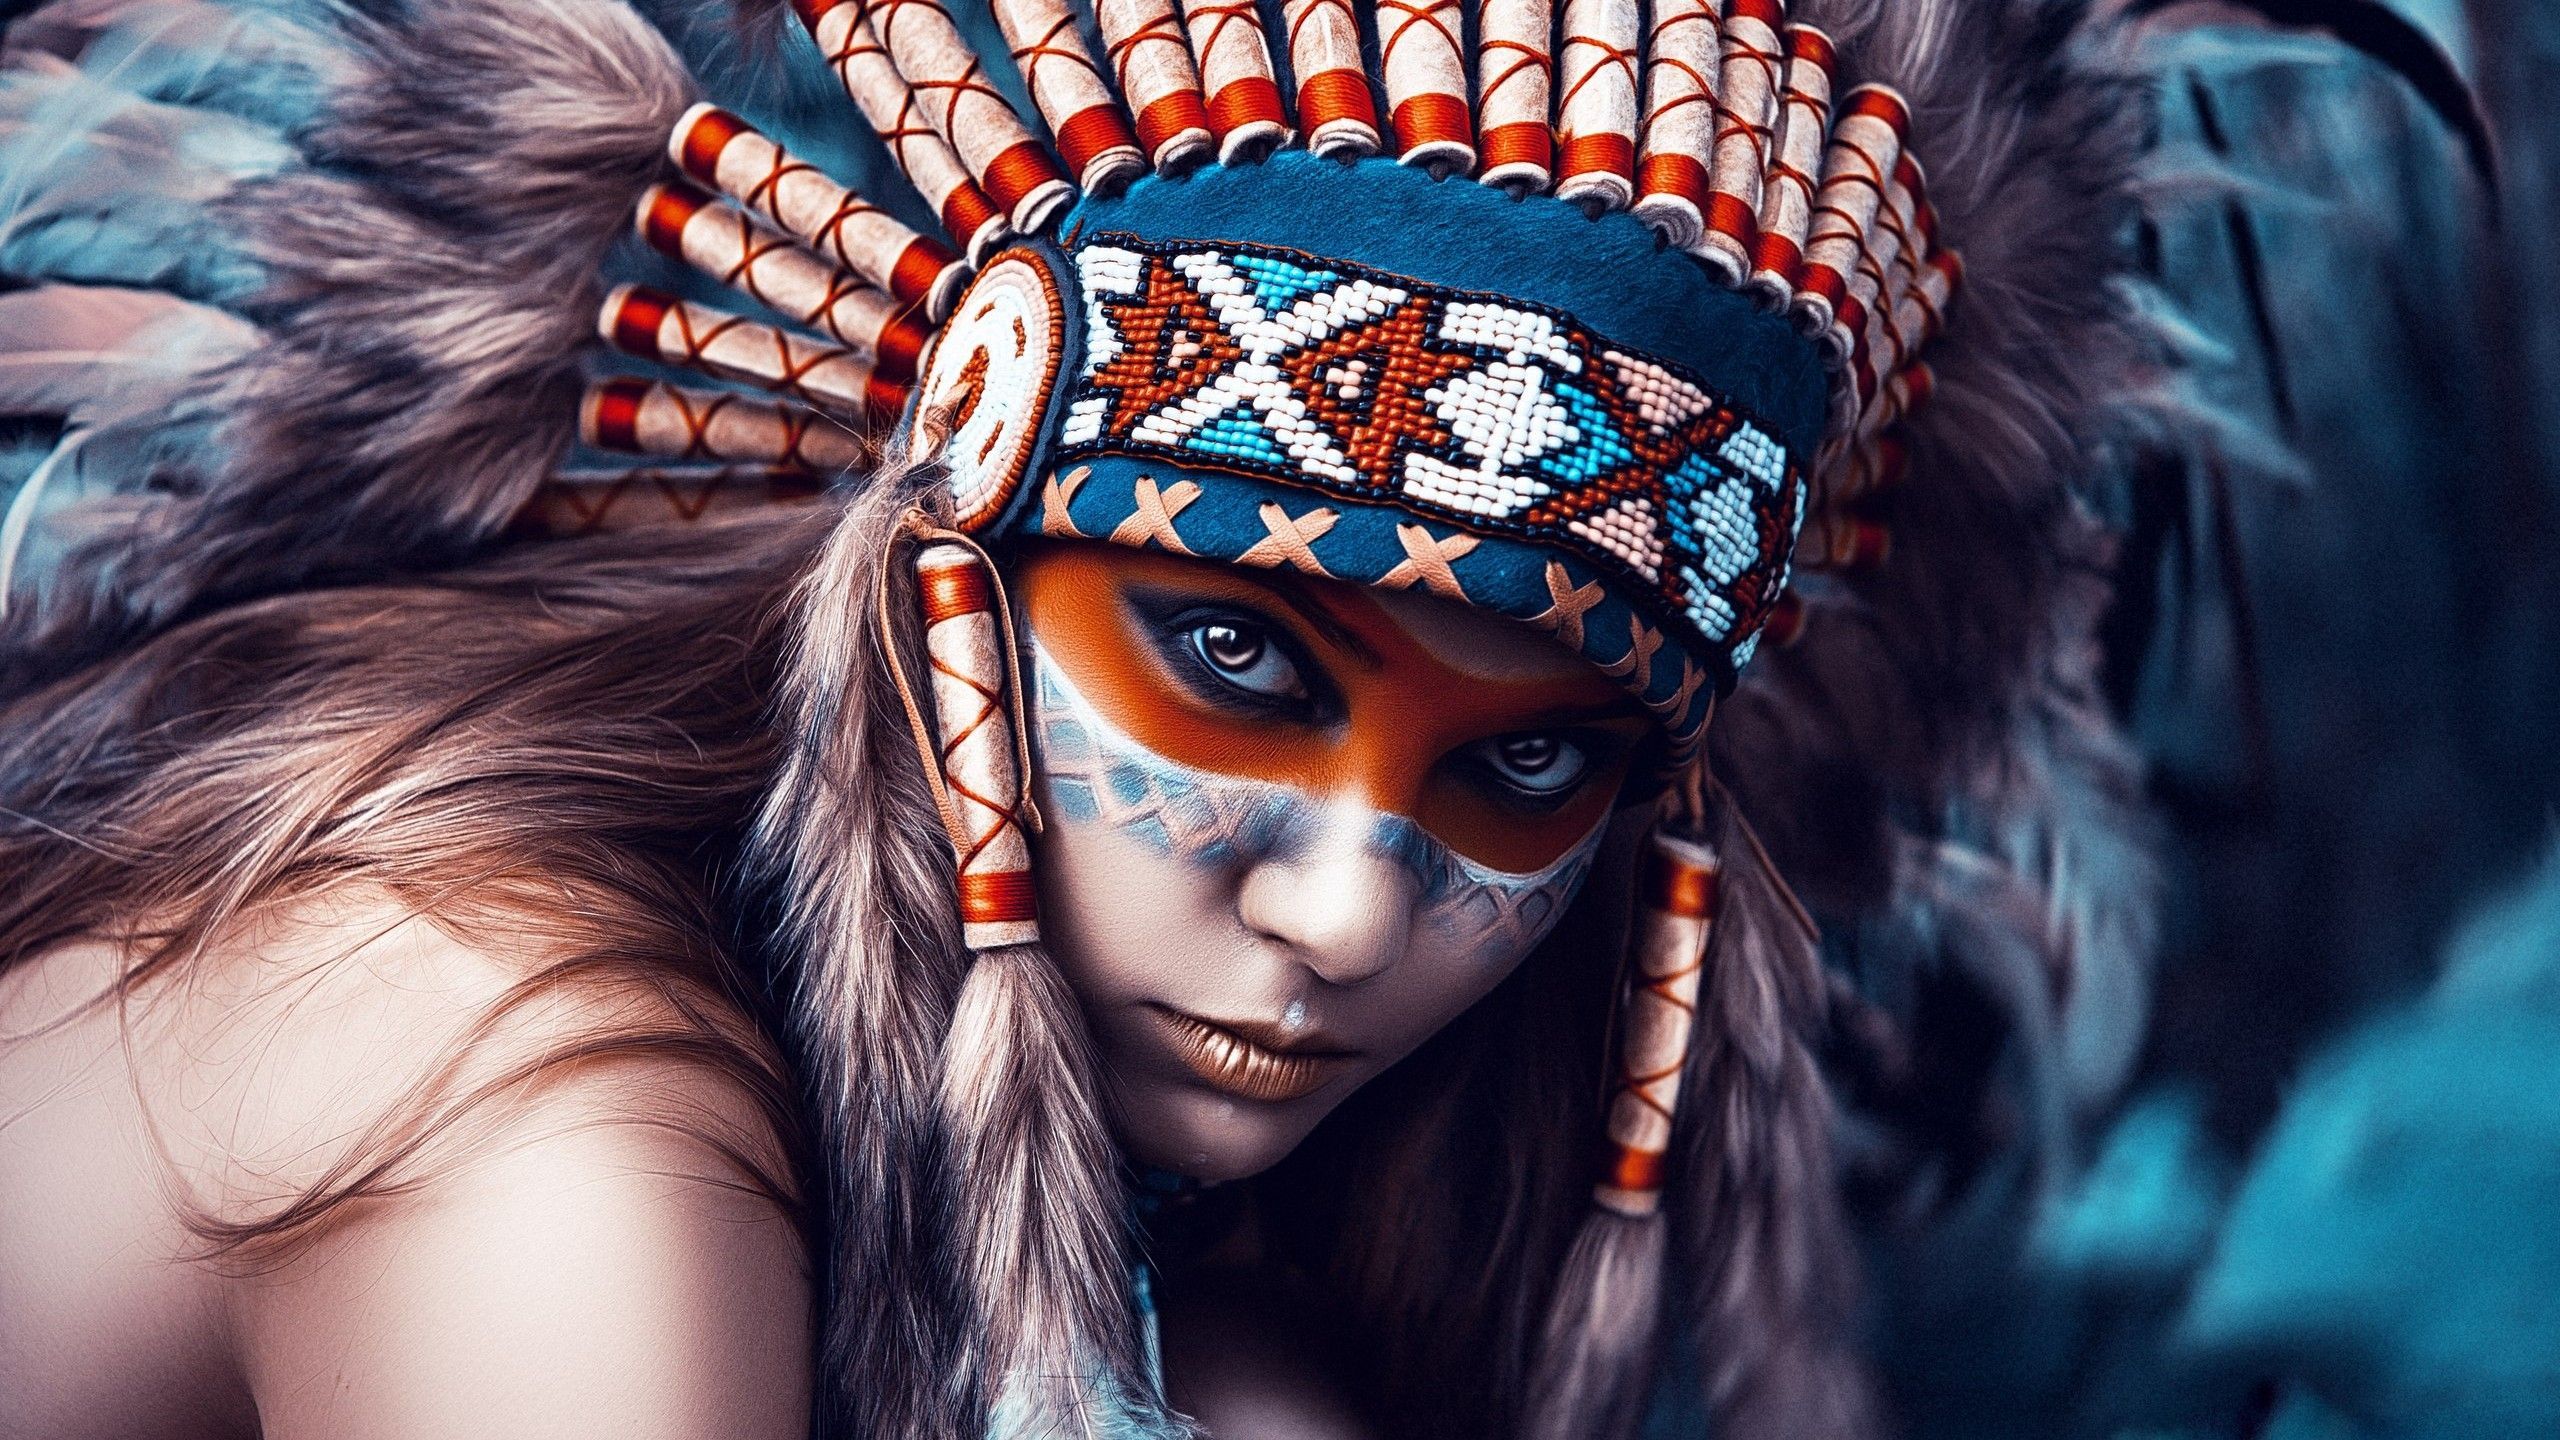 Native American Warrior Wallpapers